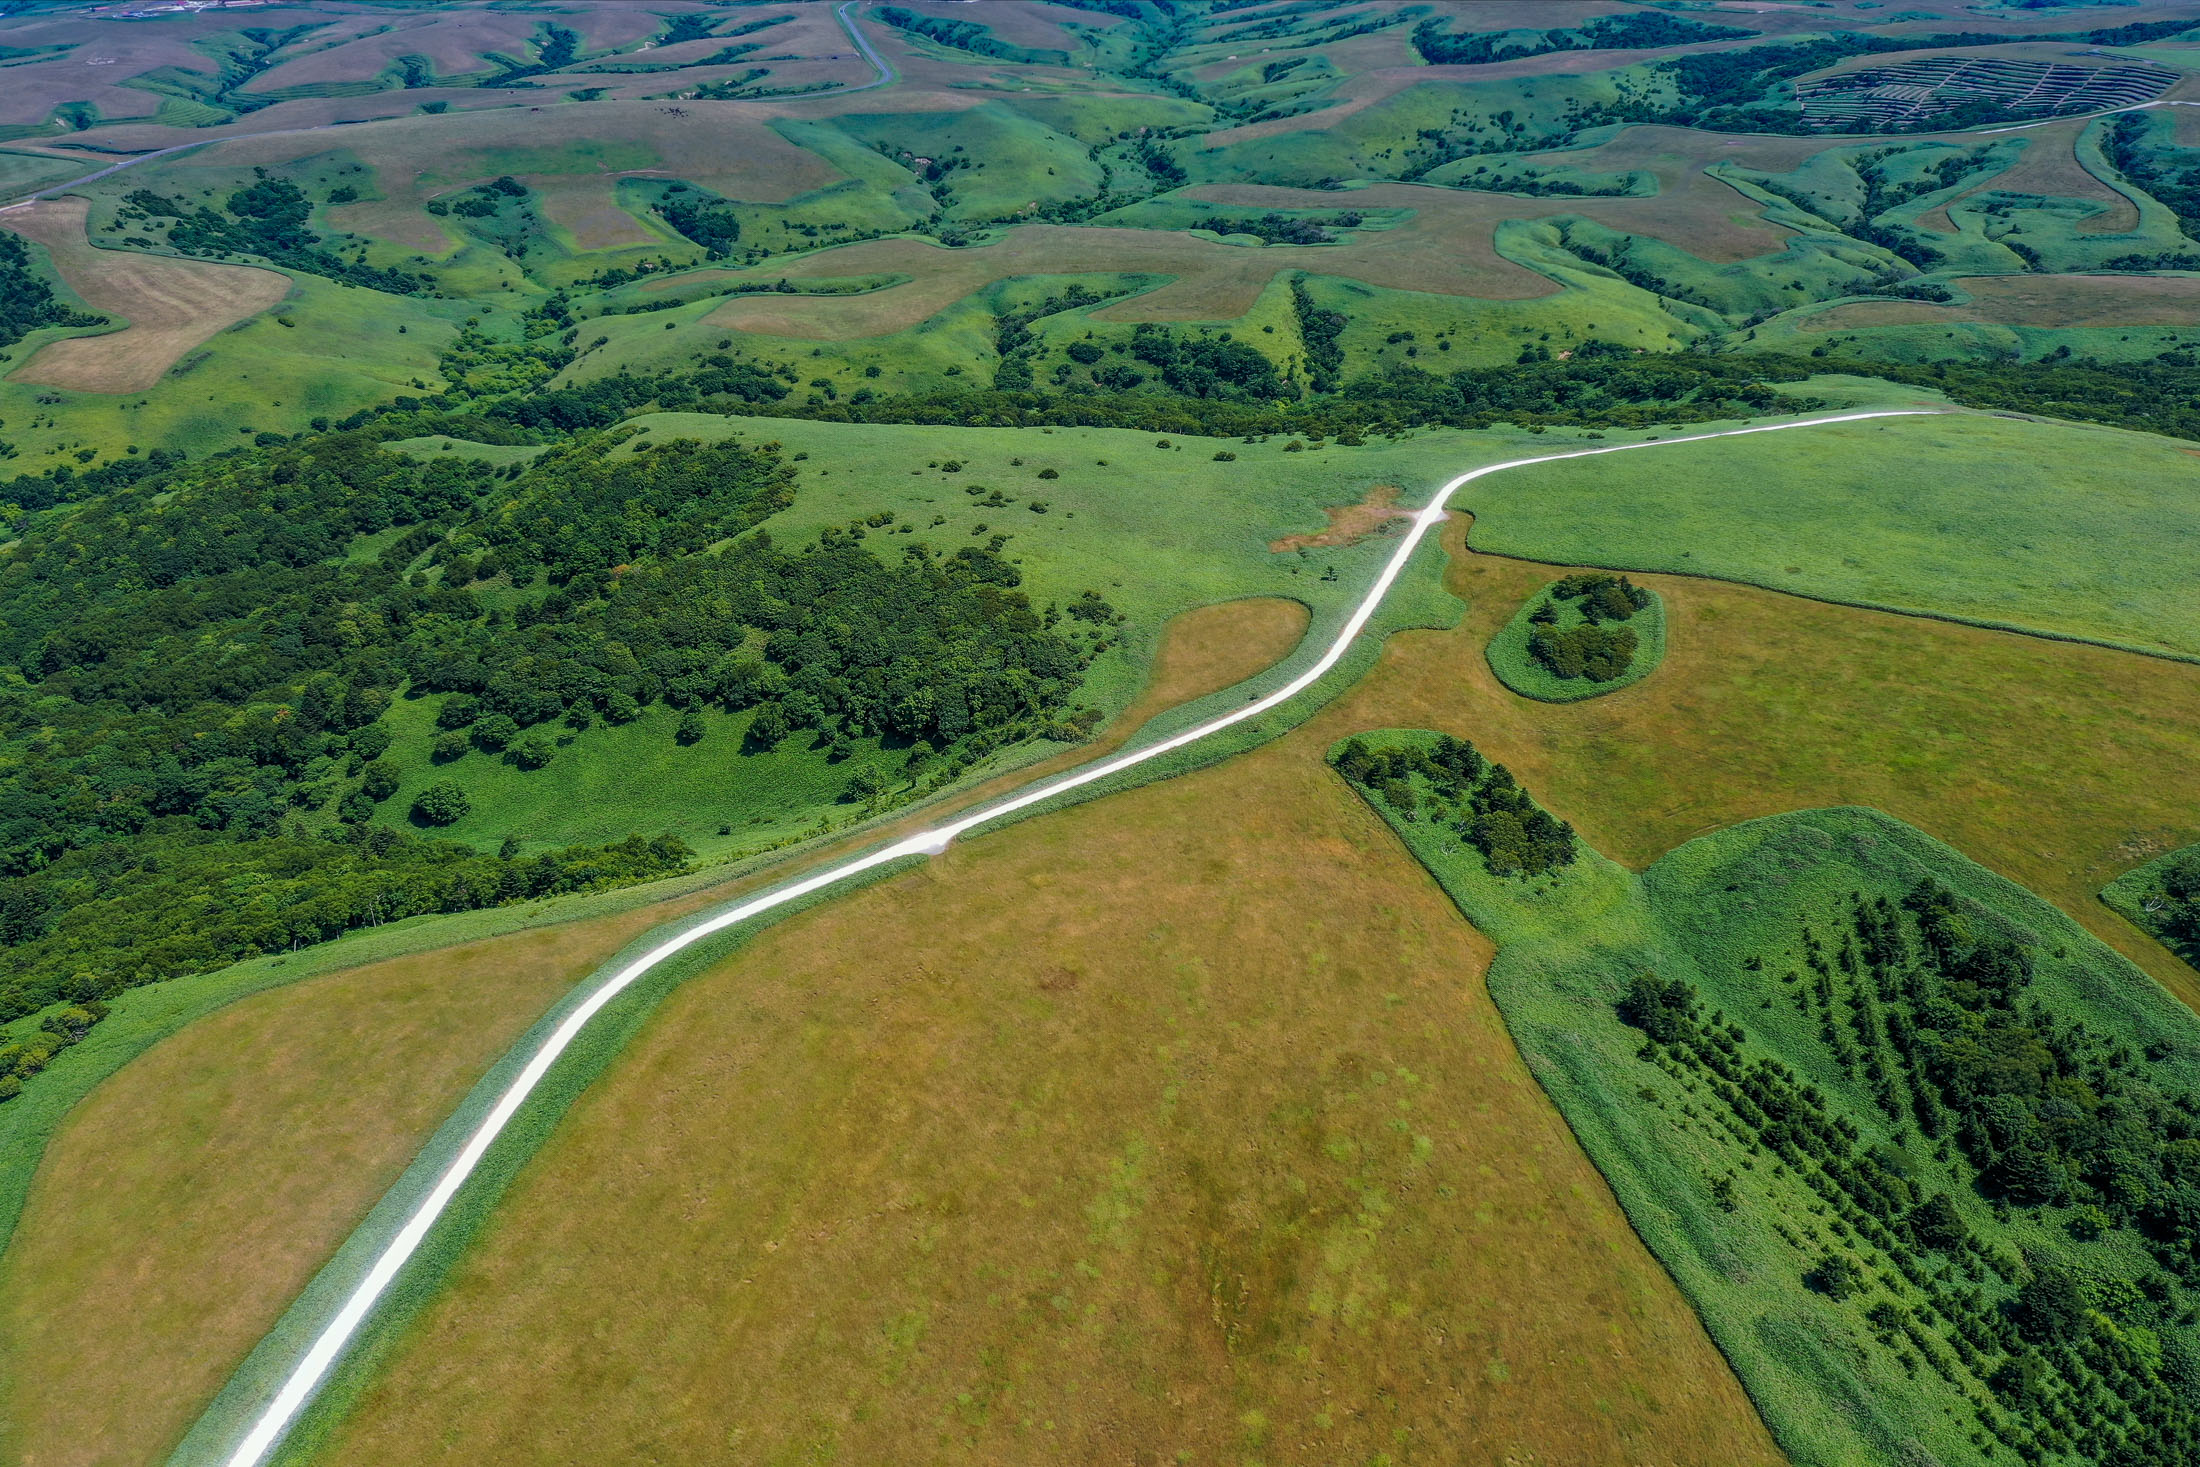 Aerial view lush green soybean hills landscape